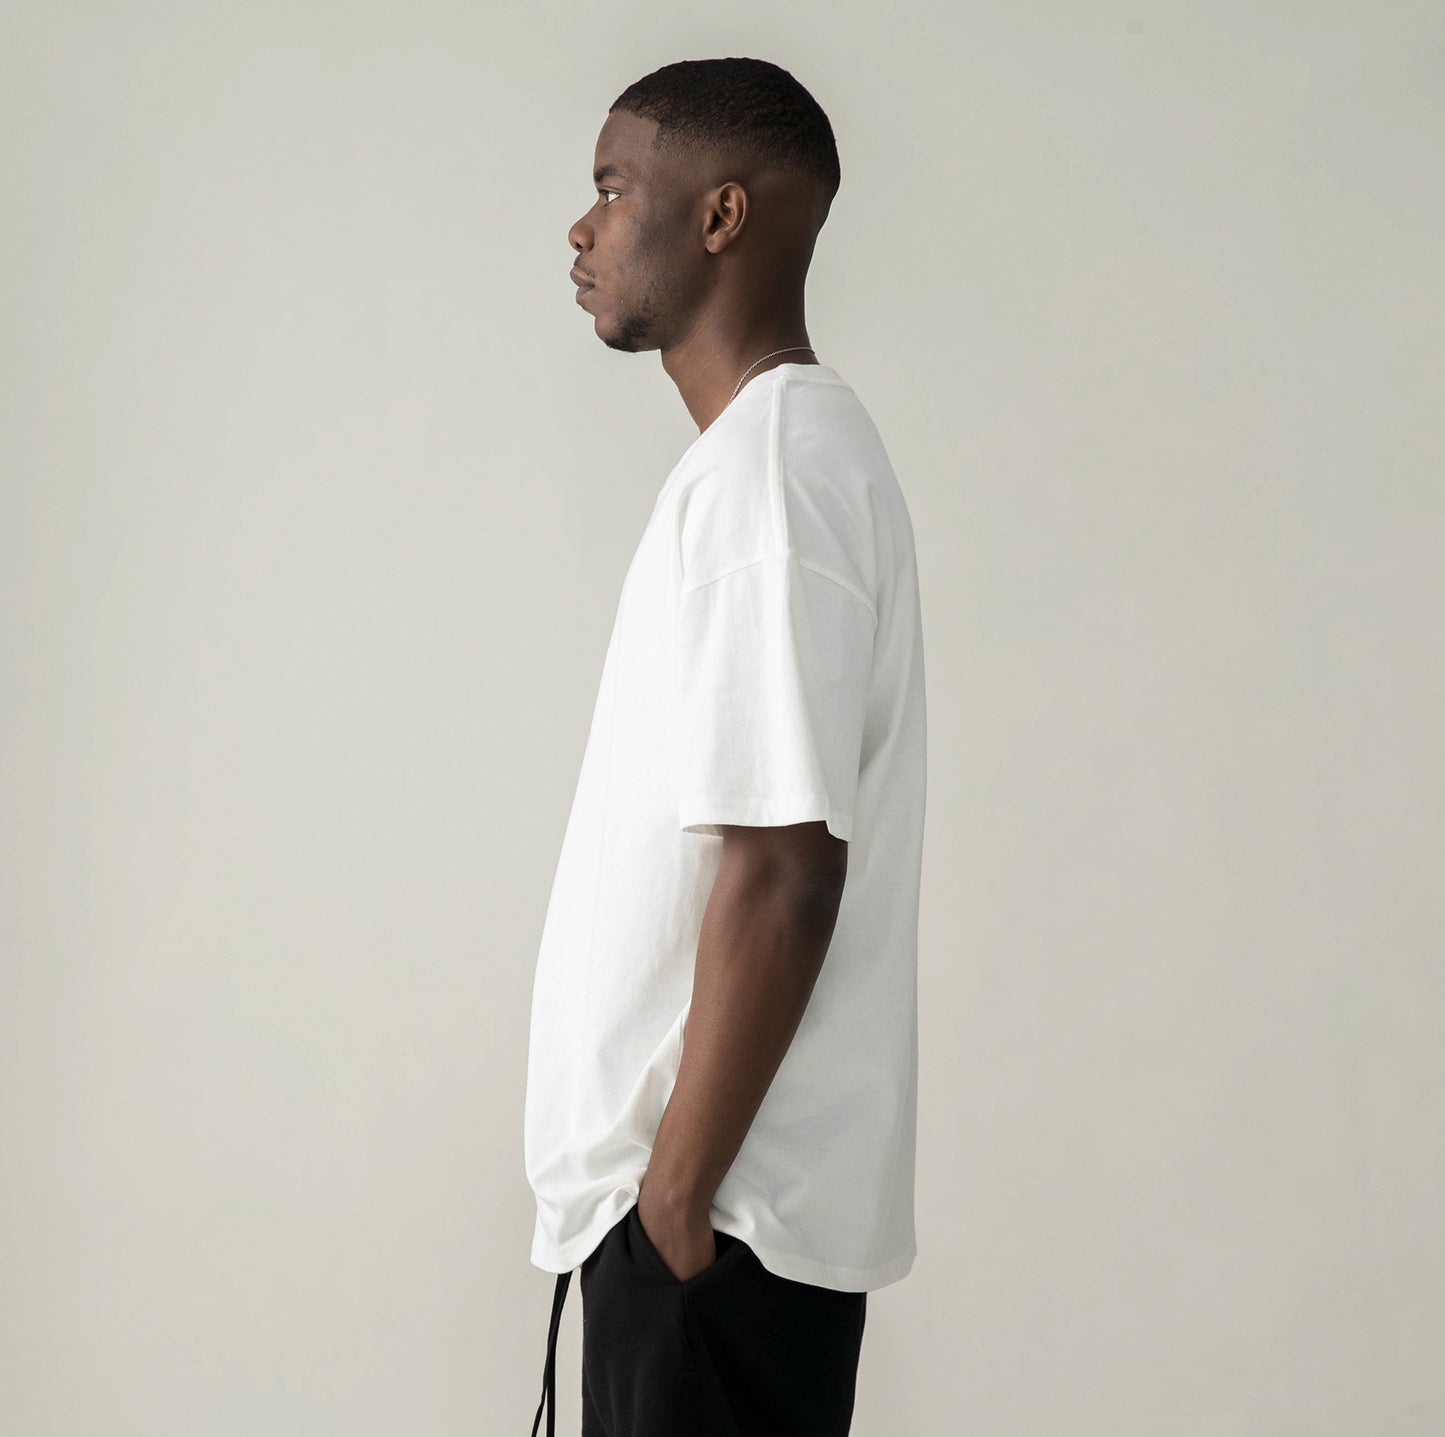 $MILE M. (BACK PRINT) - Unisex Oversized T-shirt - Side view model - white